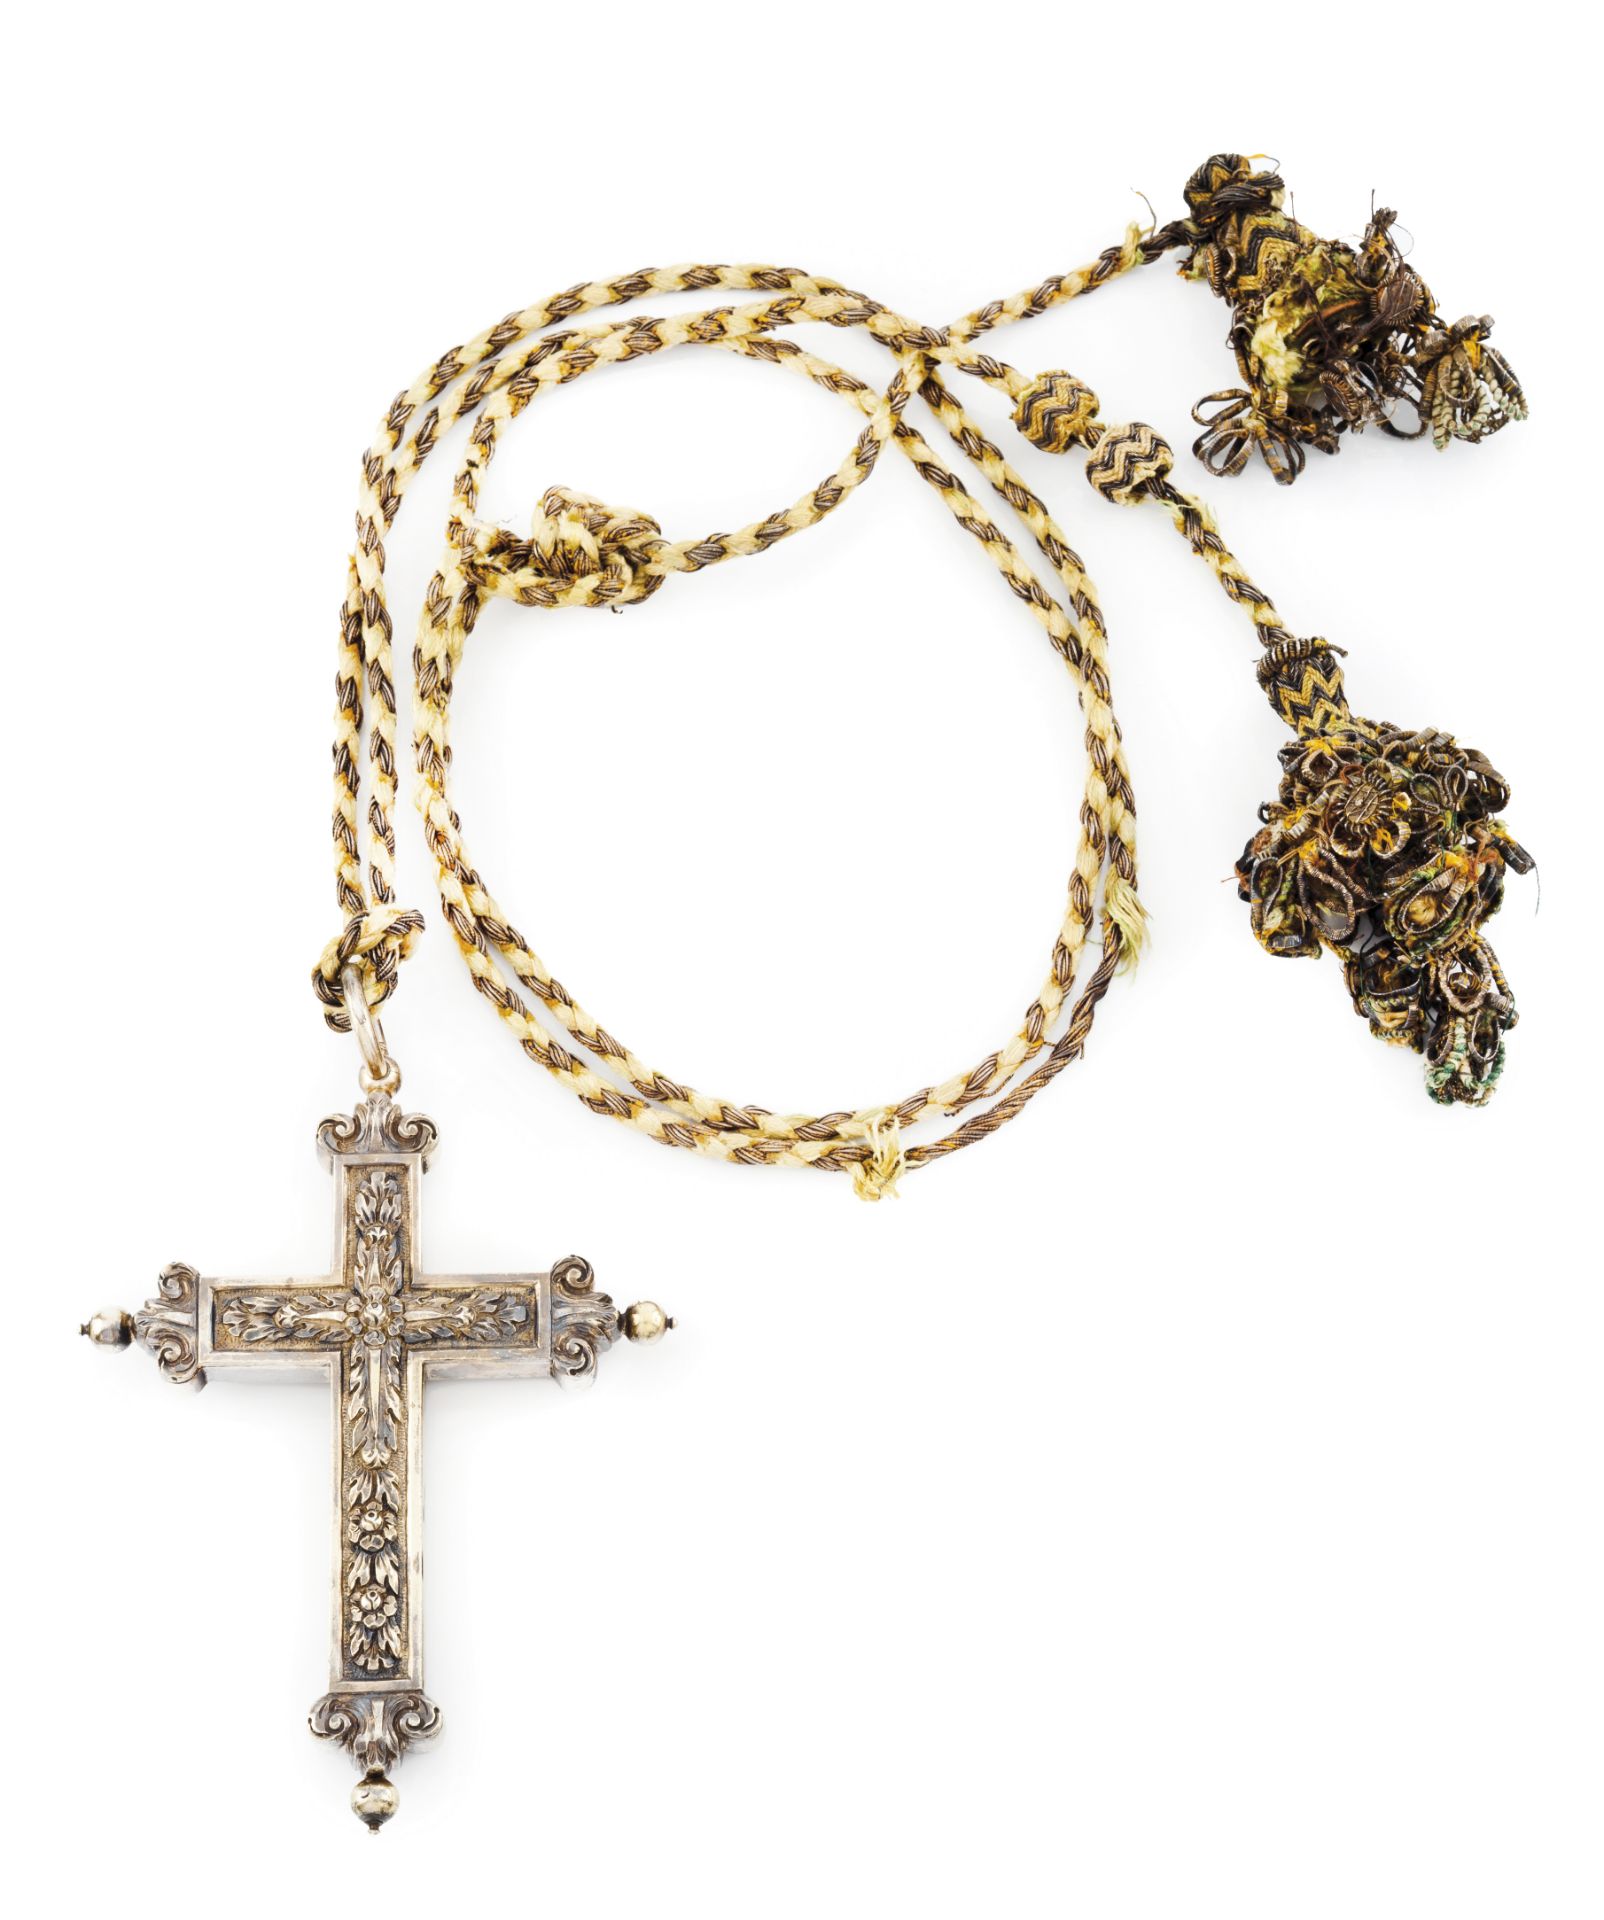 A important reliquary crucifix